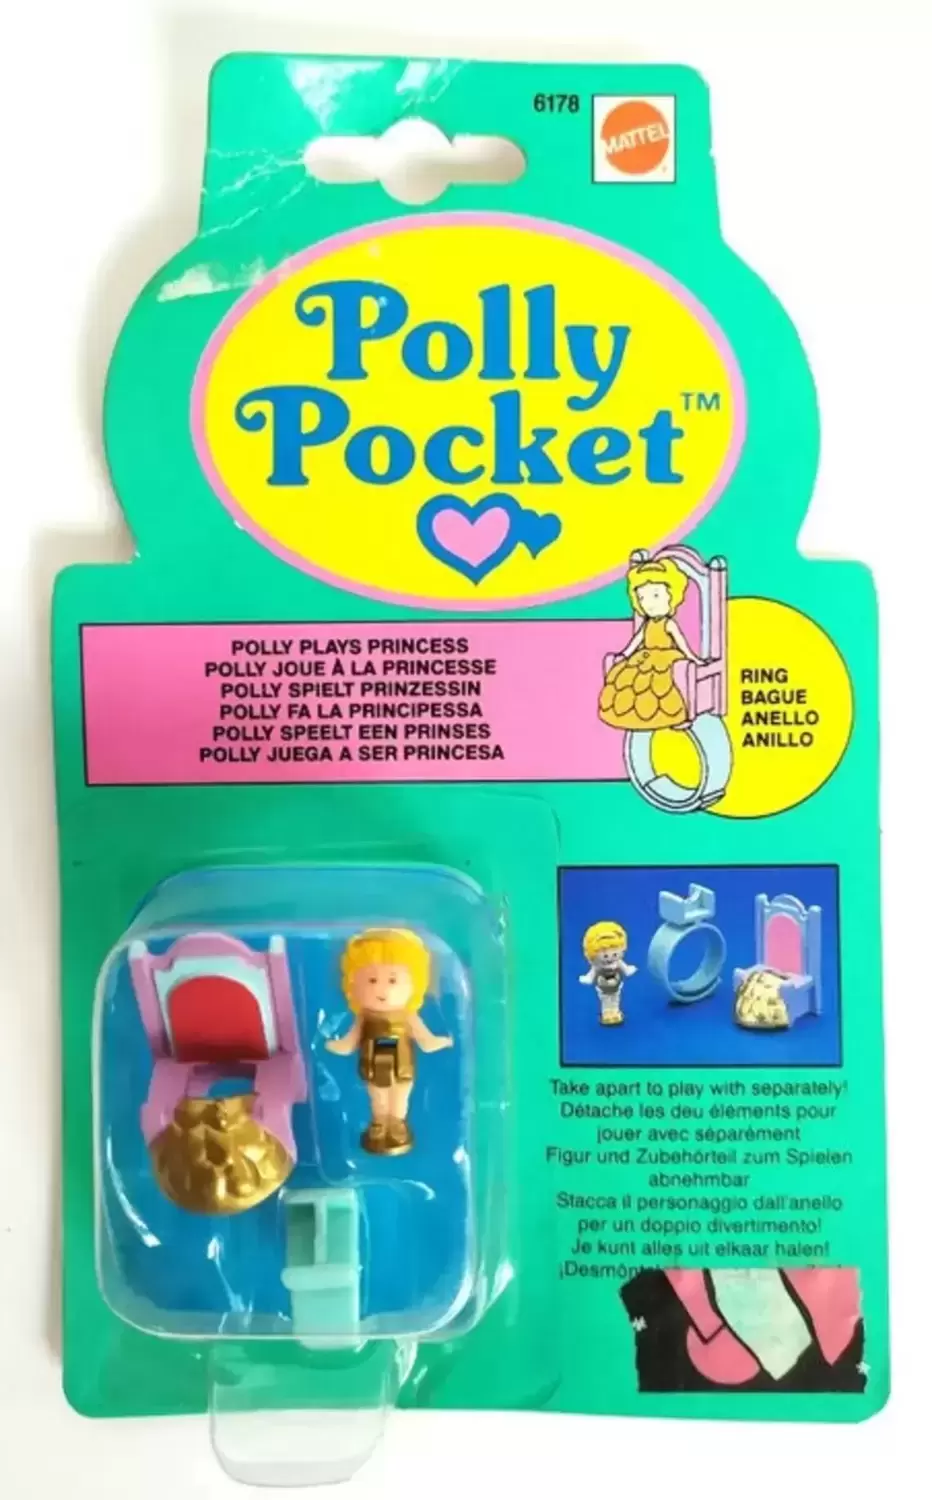 Polly Pocket (1989 - 1998) - Polly on a throne